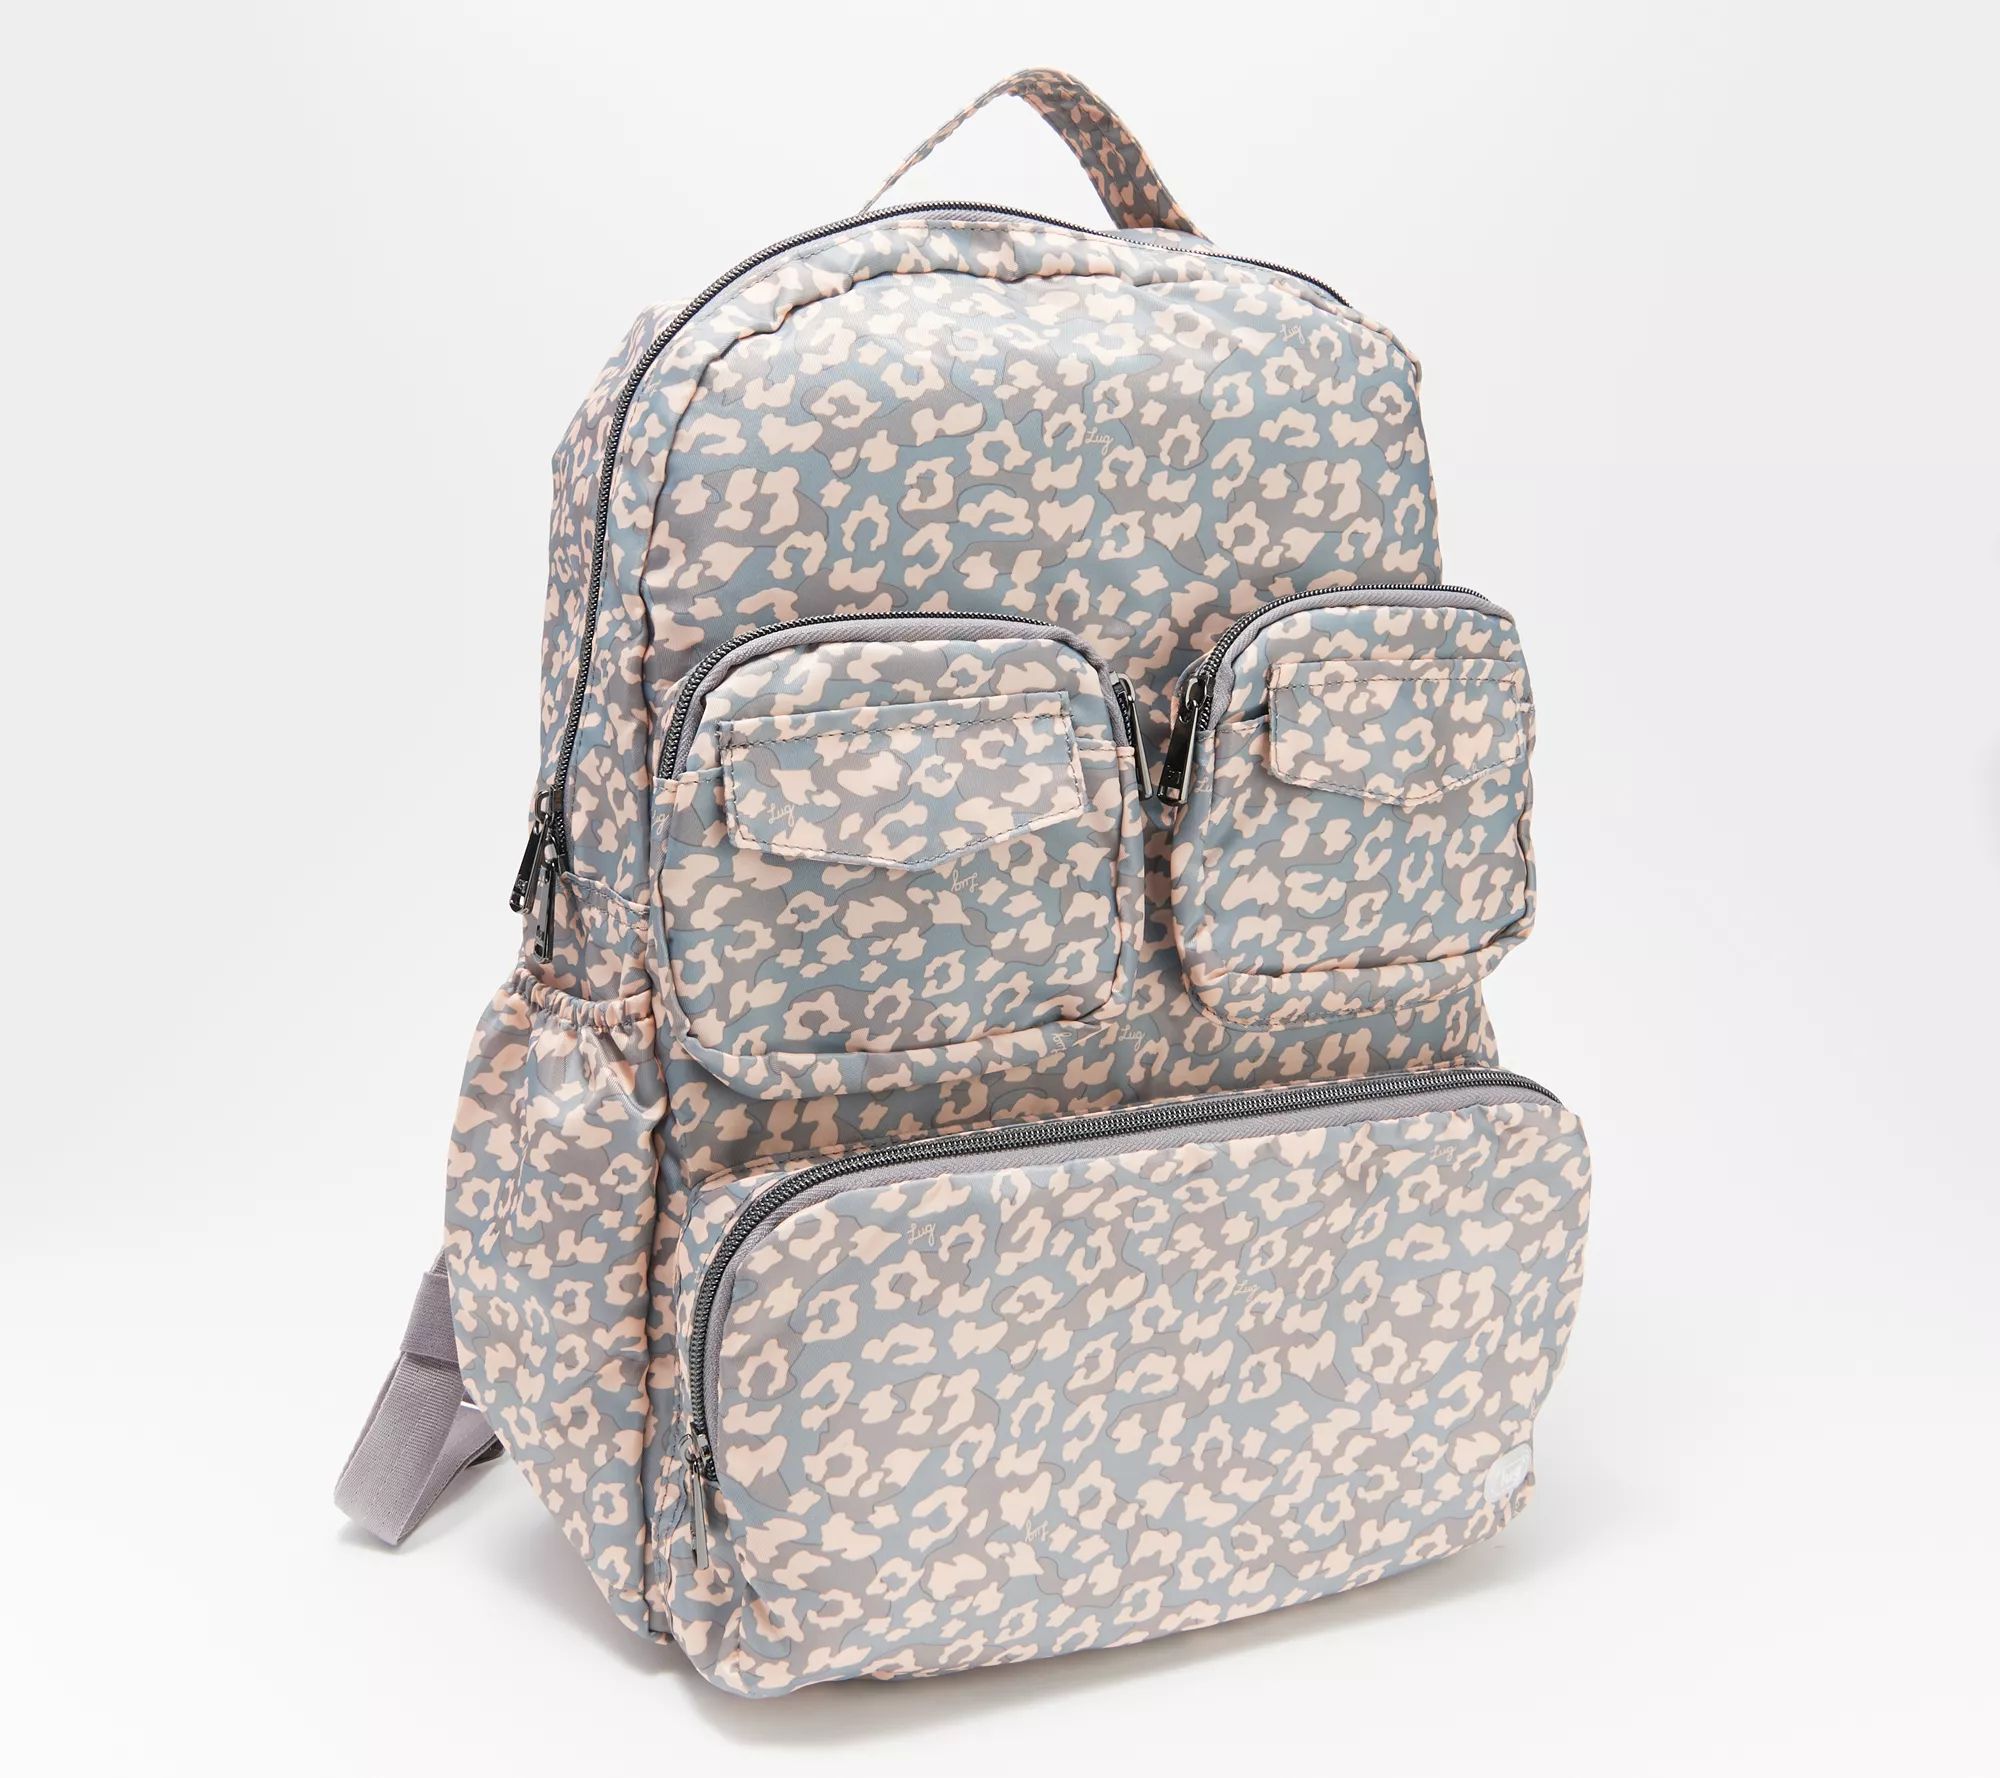 Lug Packable Backpack Bag - Puddle Jumper - QVC.com | QVC